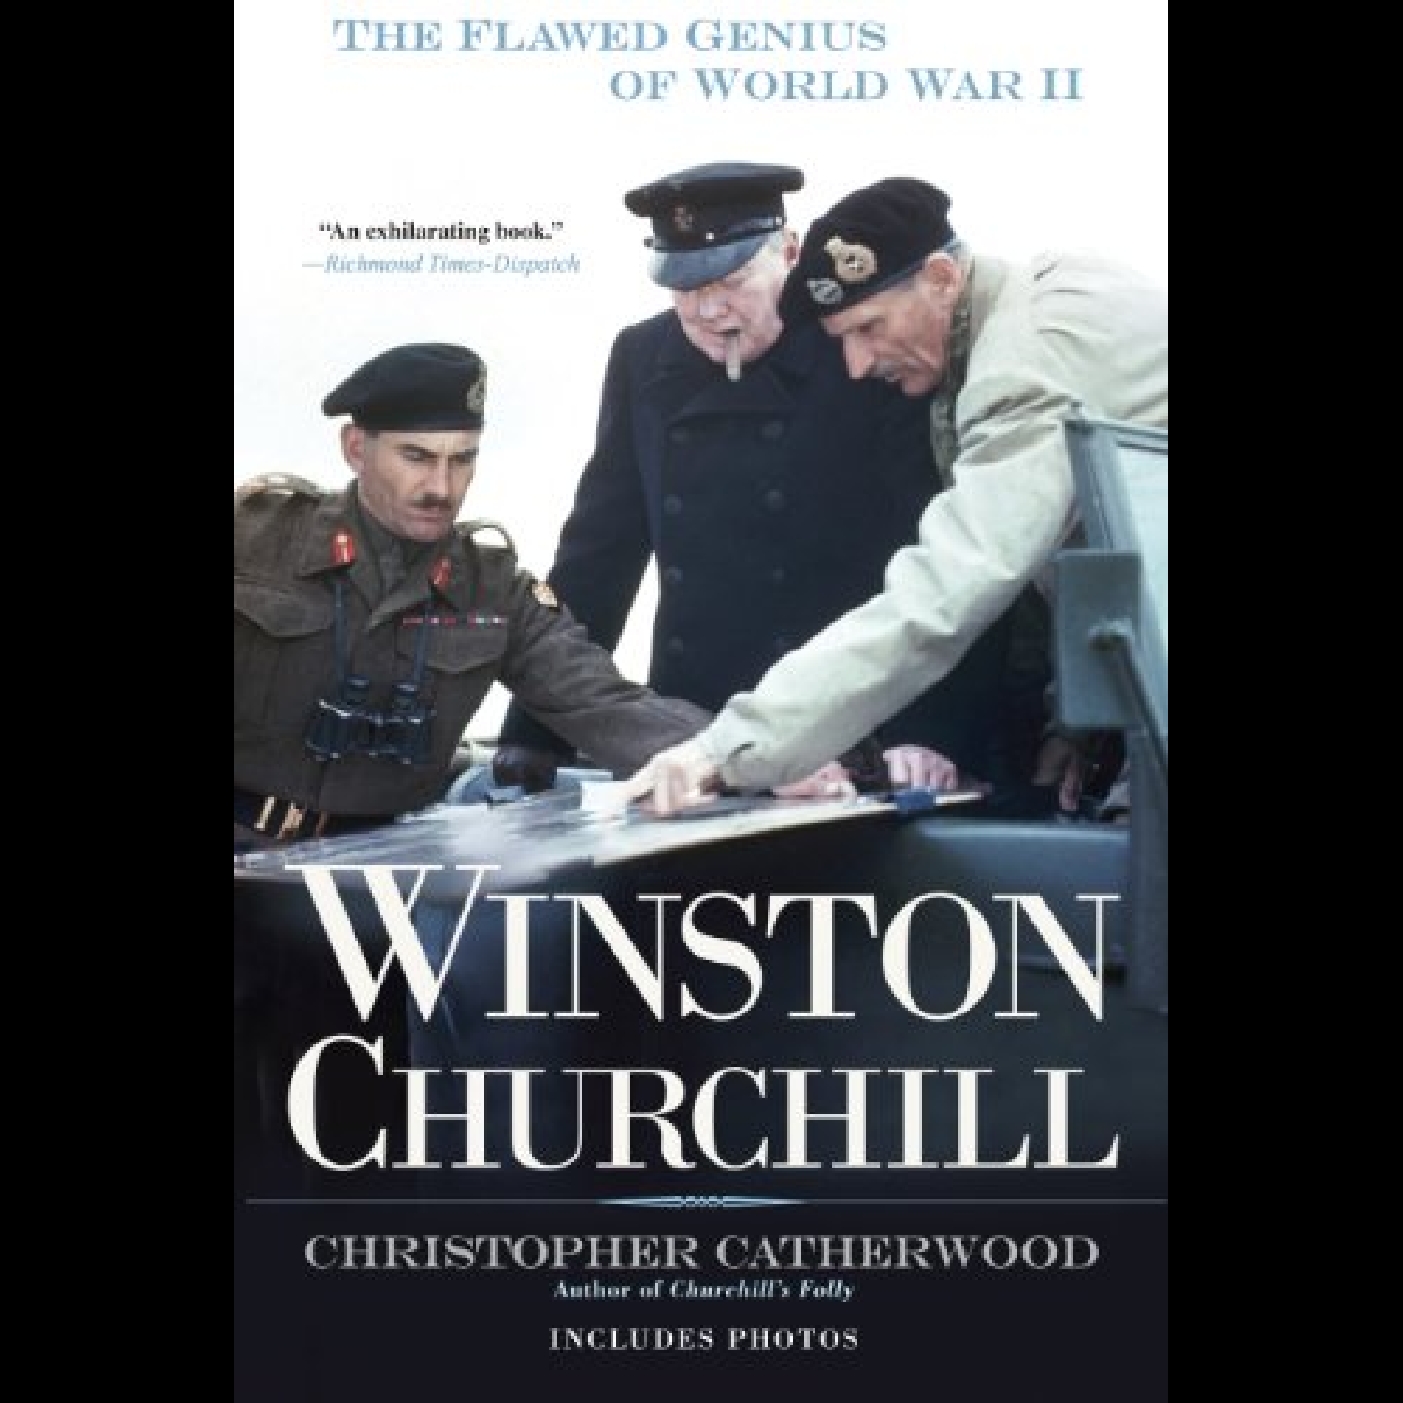 Winston Churchill #2 - Flawed Genius of WW2 - Professor Christopher Catherwood